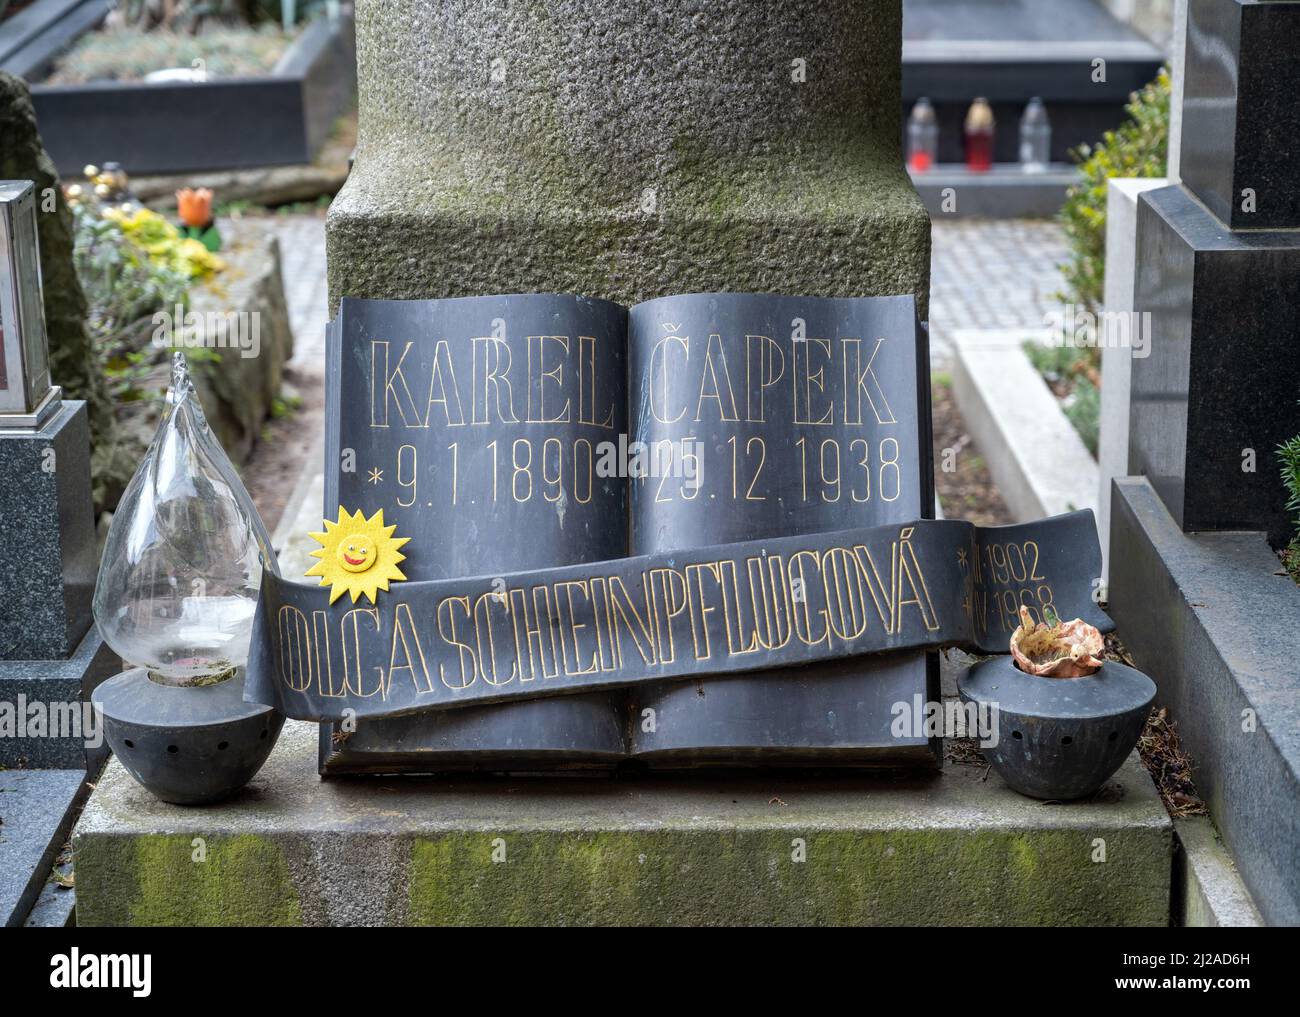 The tomb of Karel Čapek and Olga Scheinpflugová at Vyšehrad cemetery in  Prague, Czech Republic Stock Photo - Alamy